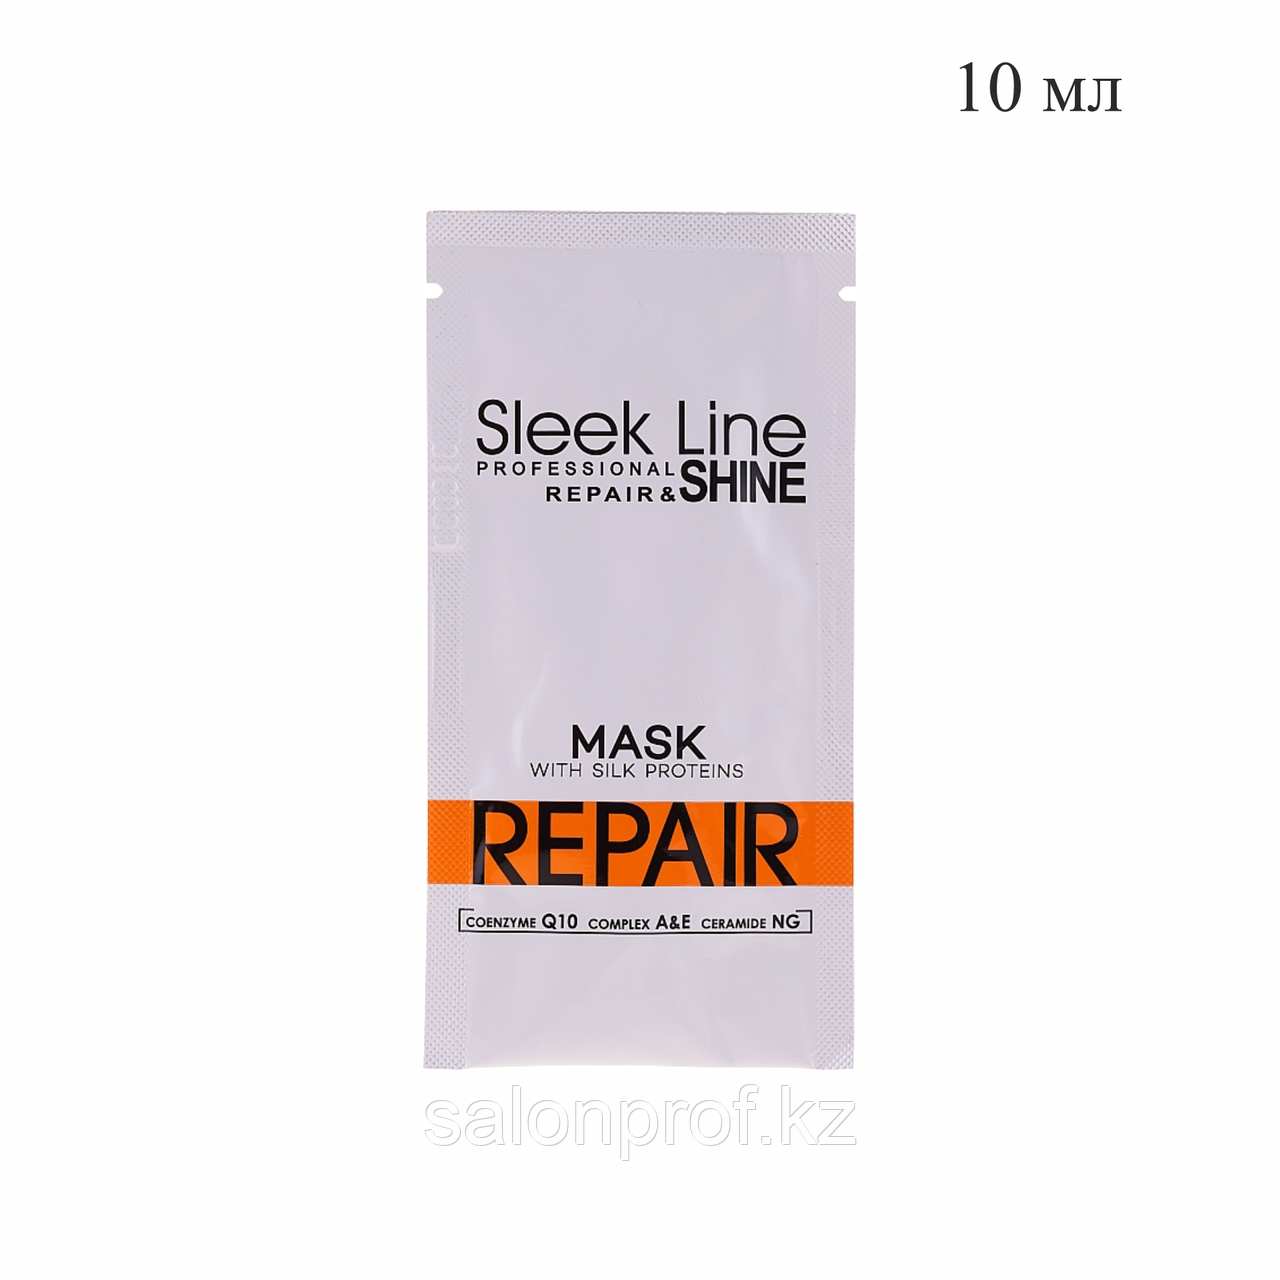 Пробник маски для восстановления волос с протеином шелка SLEEK LINE REPAIR 10 мл №50938/10417